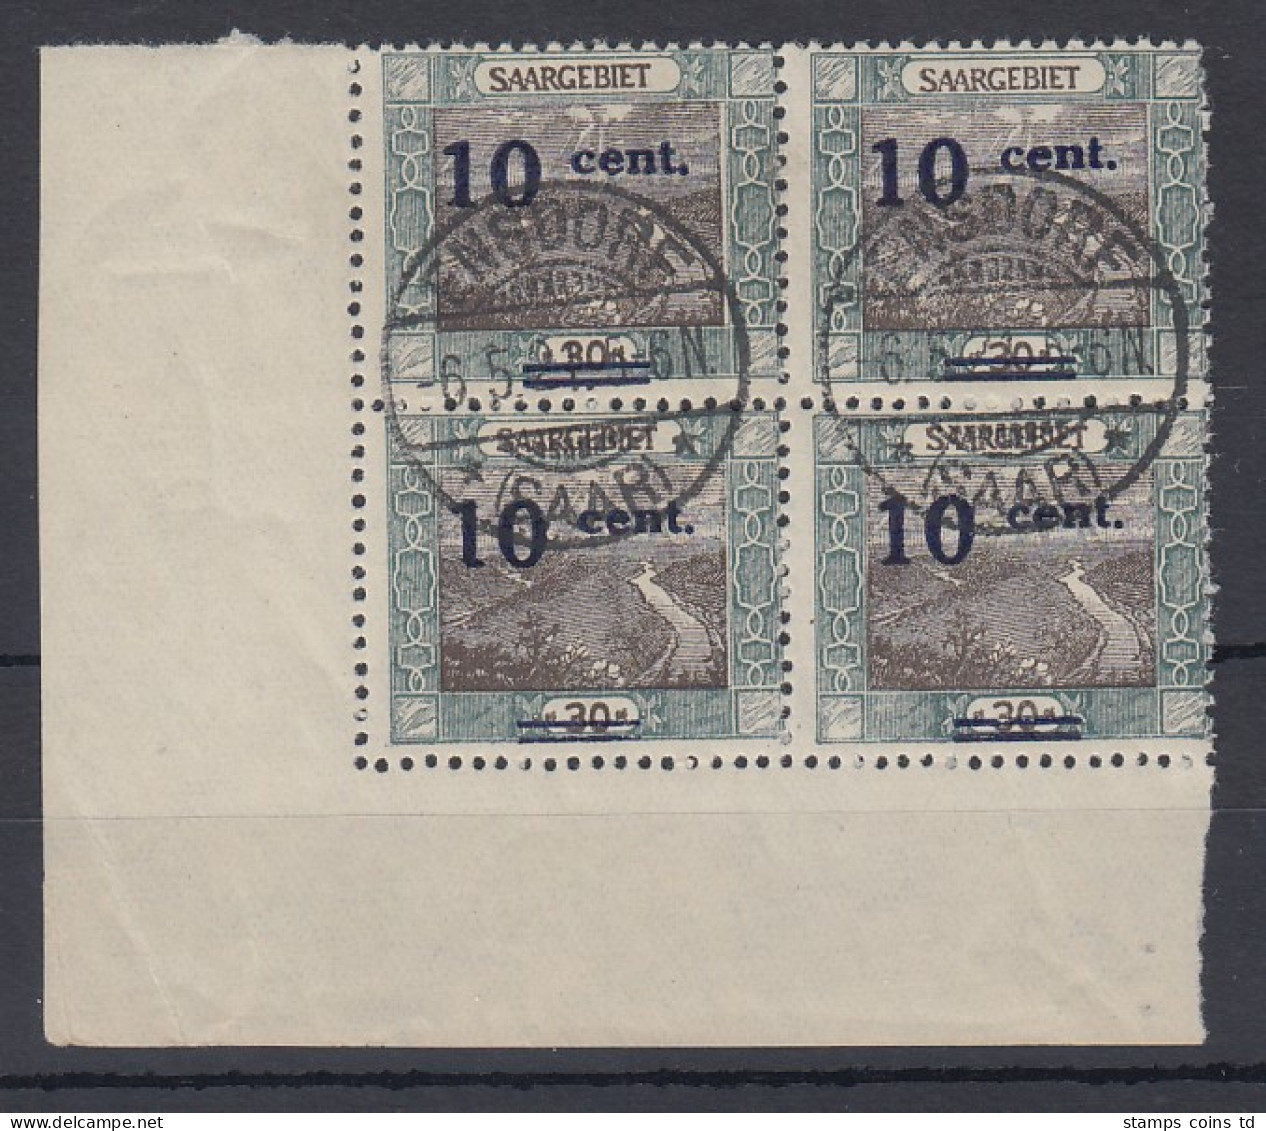 Saar 1921 Mi.-Nr. 72A  I Eckrand-VB Unten Links, O ENSDORF, Gepr. BPP - Used Stamps